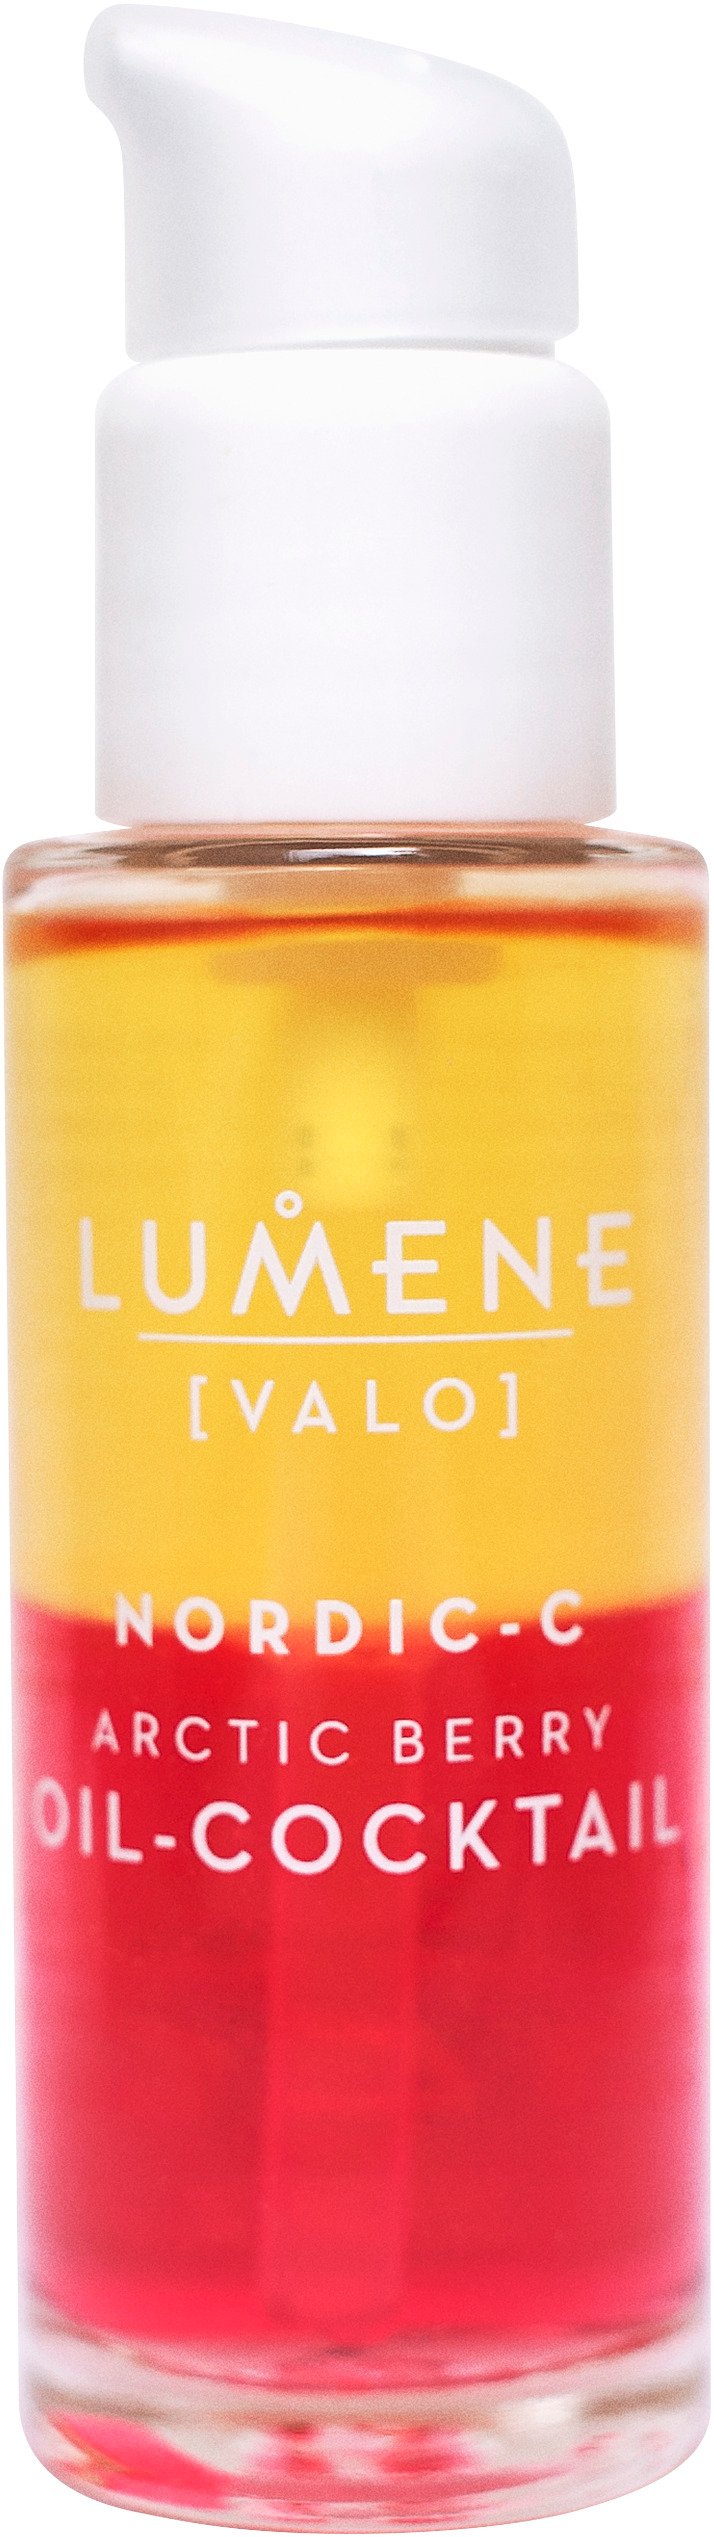 Lumene Nordic-C Valo Artic Berry Oil-Cocktail 30 ml